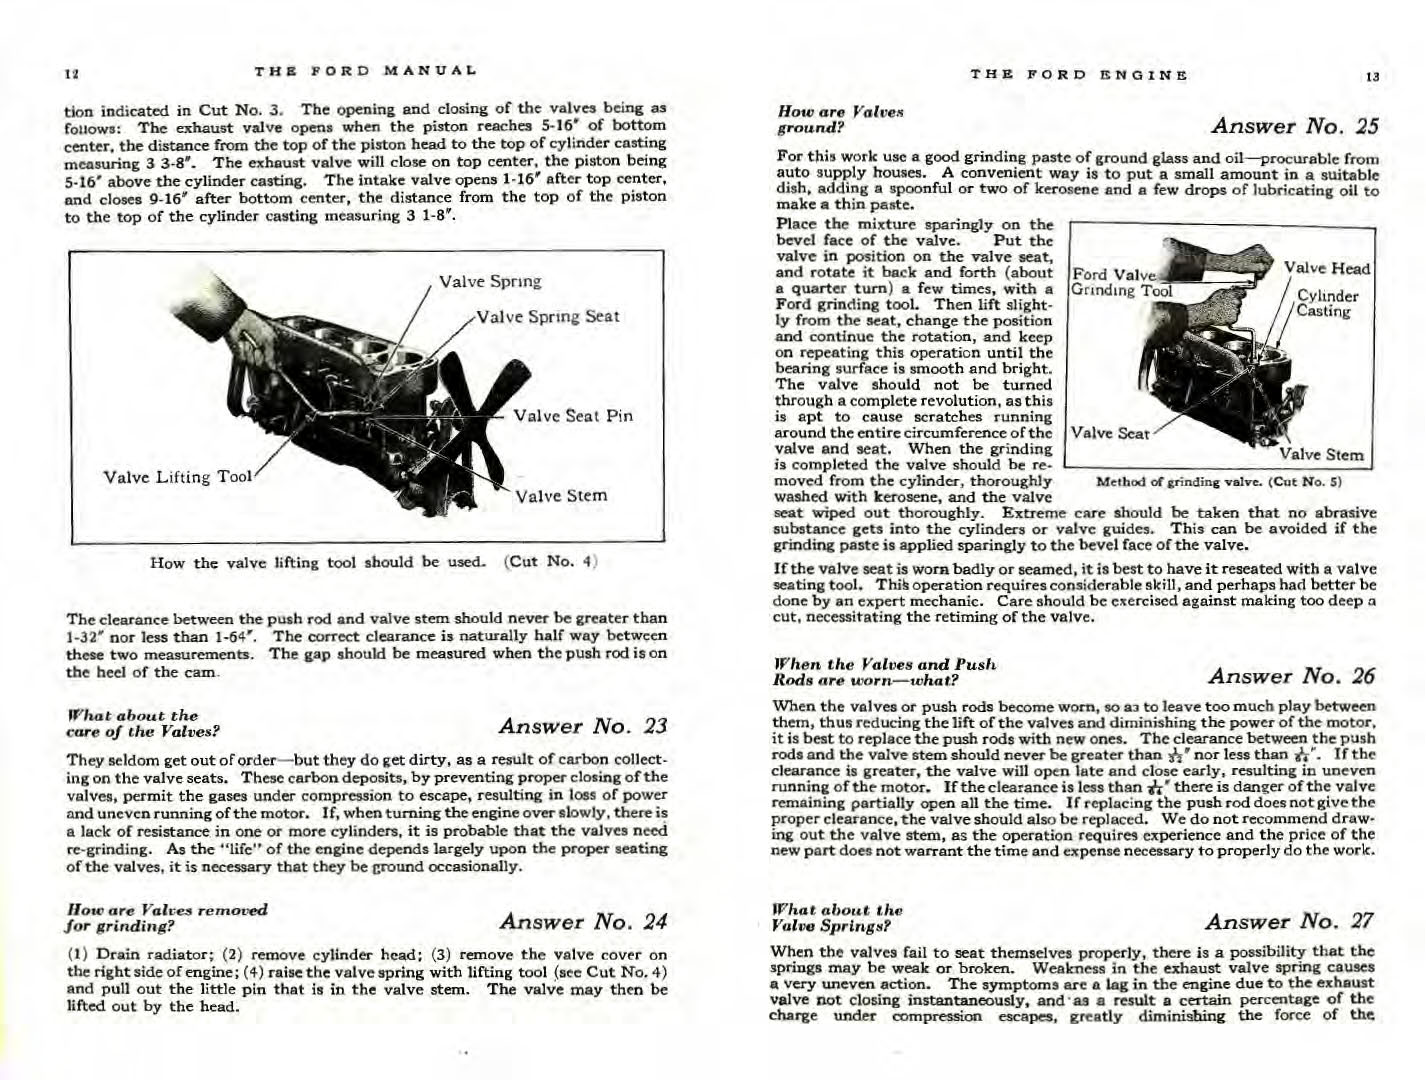 1922_Ford_Manual-12-13